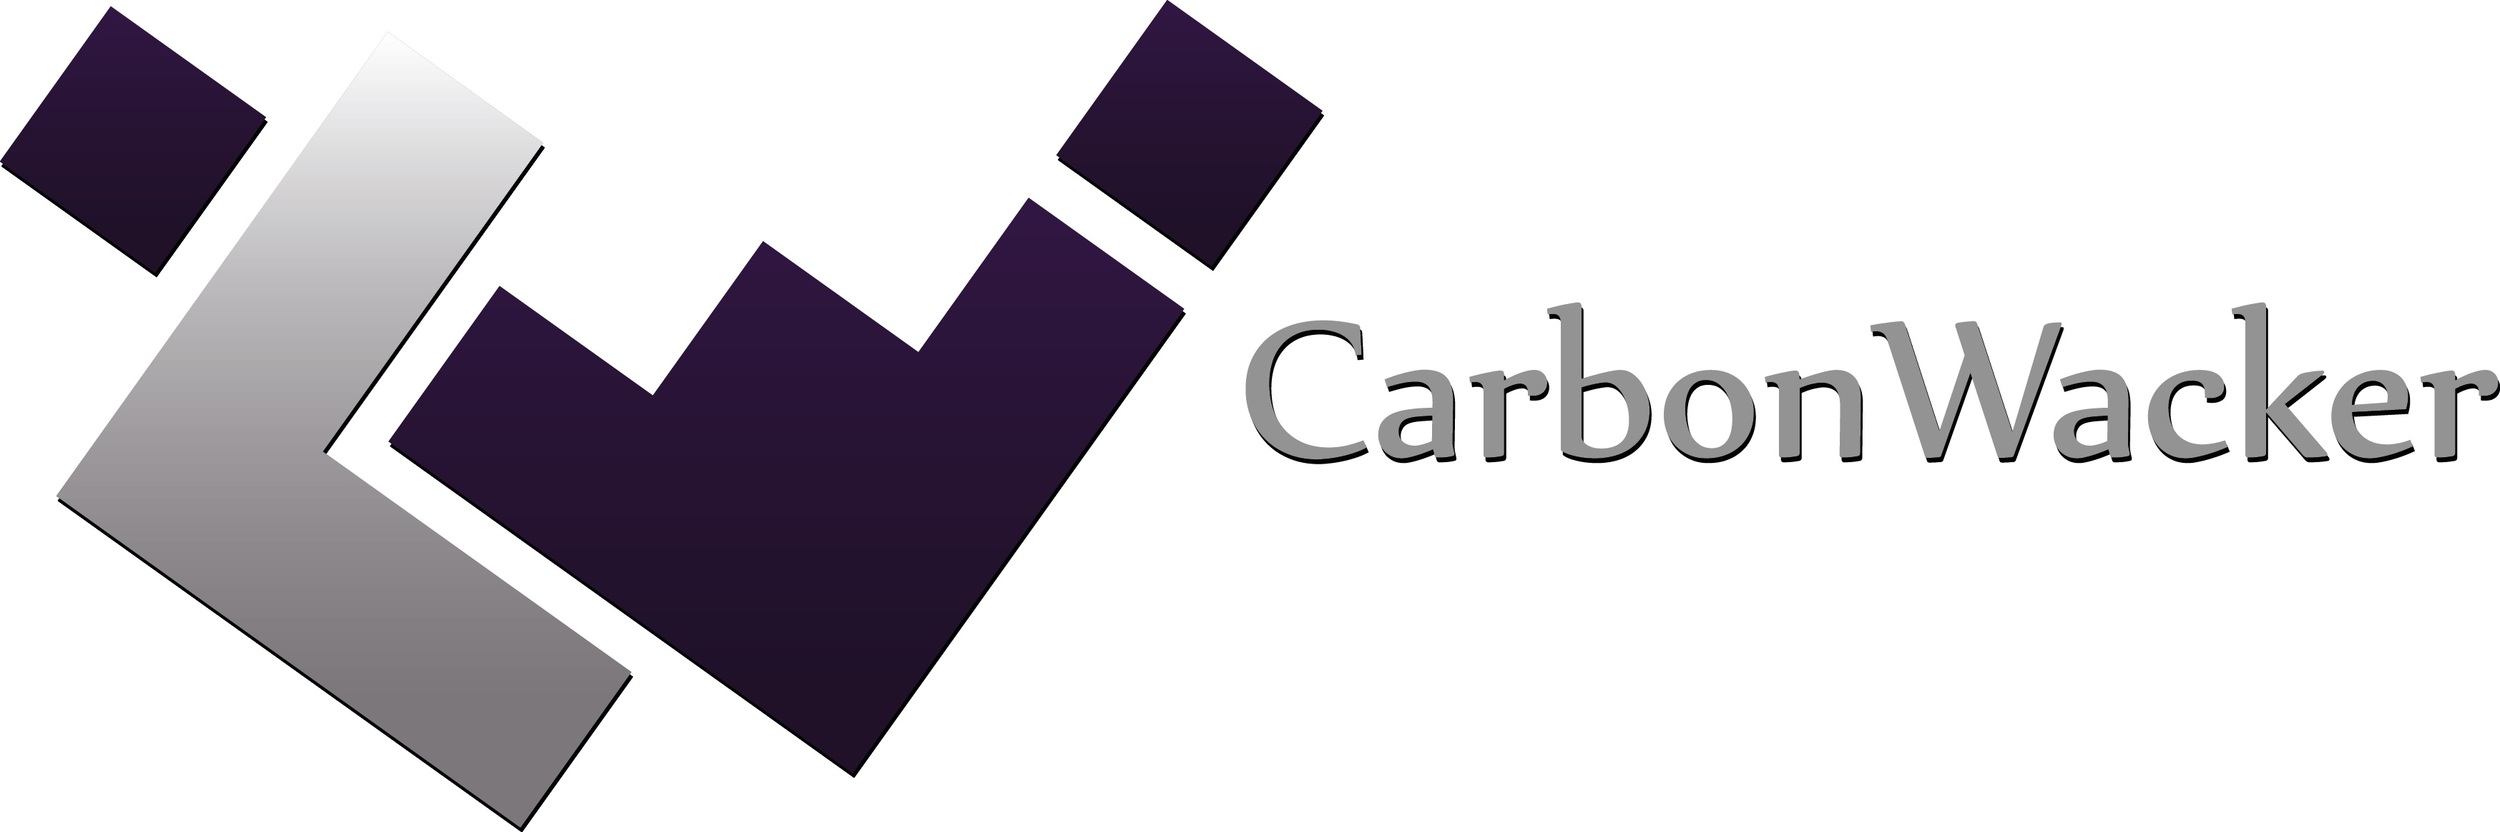 CarbonWacker Logo.jpg